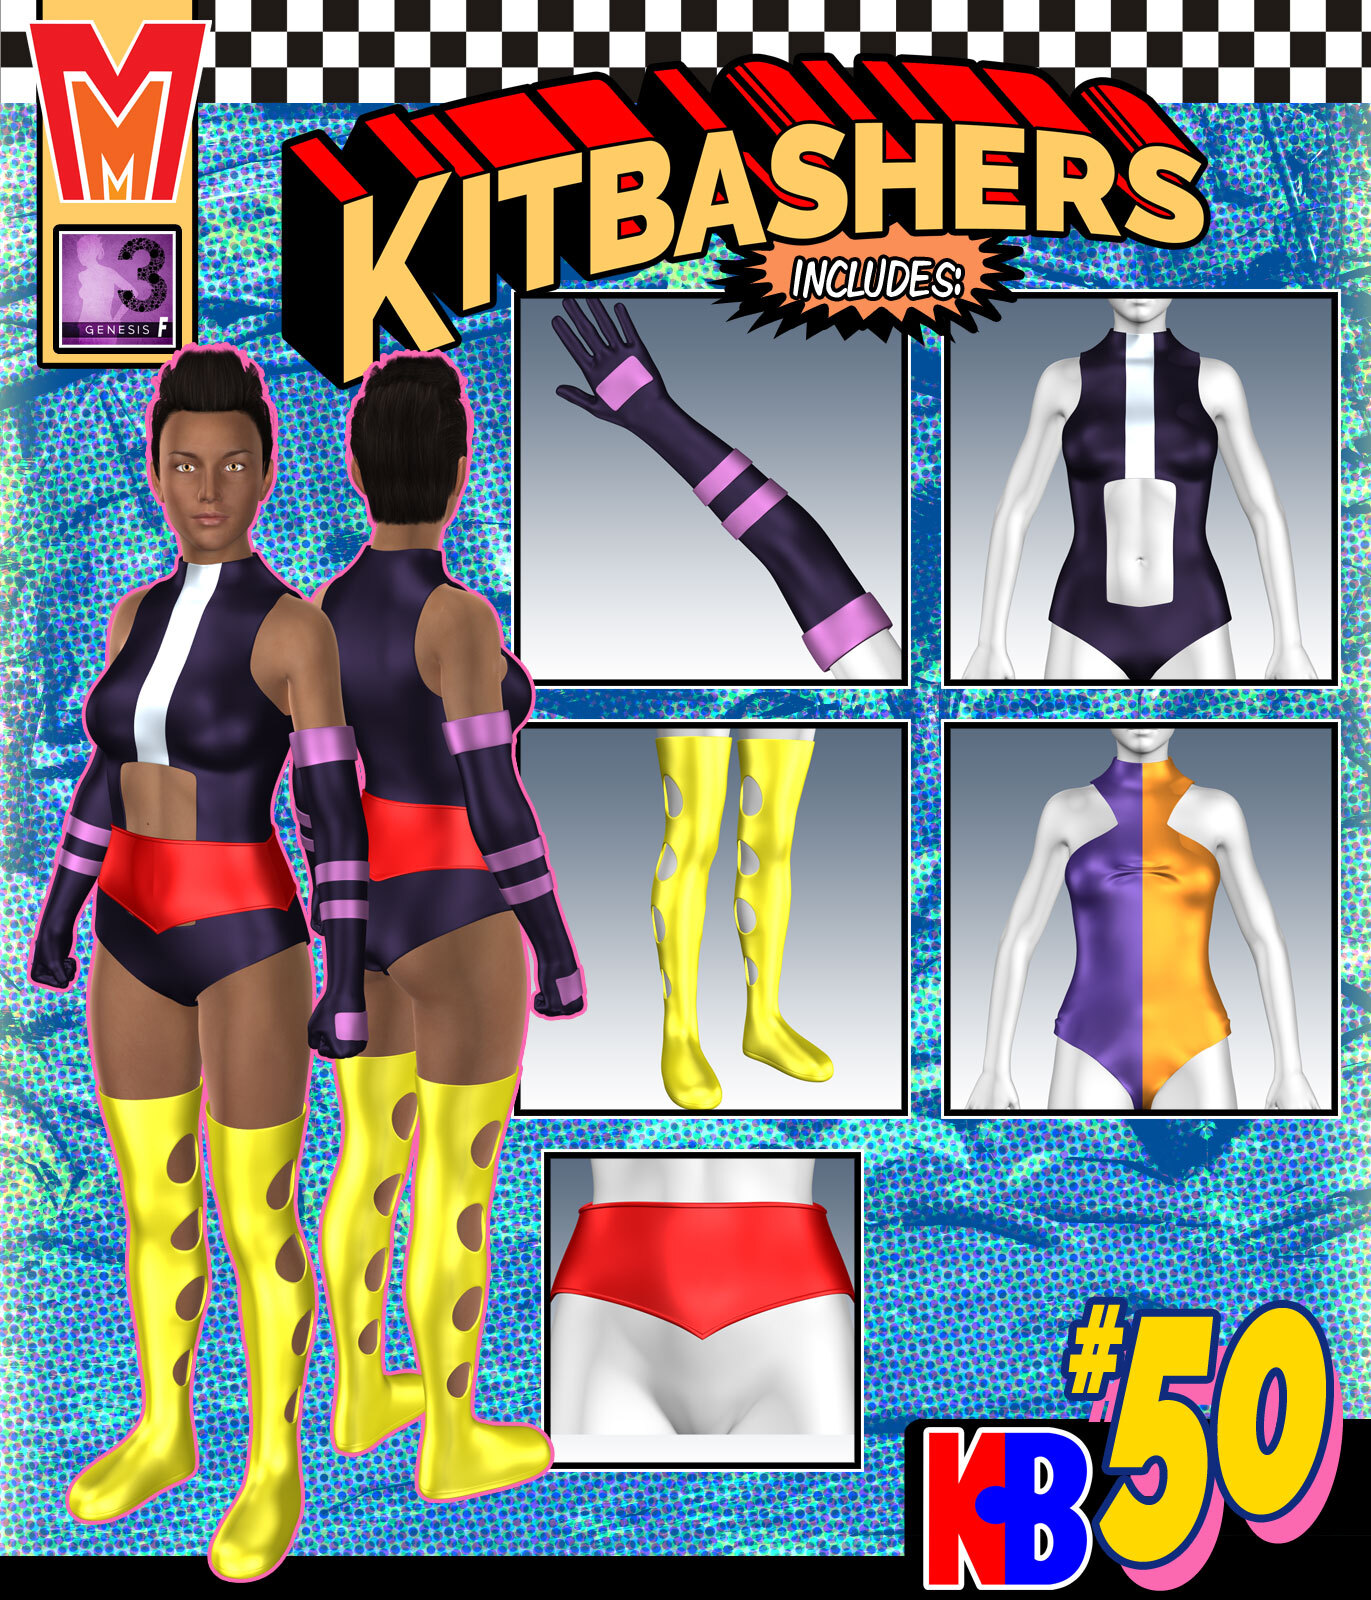 Kitbashers 050 MMG3F by: MightyMite, 3D Models by Daz 3D